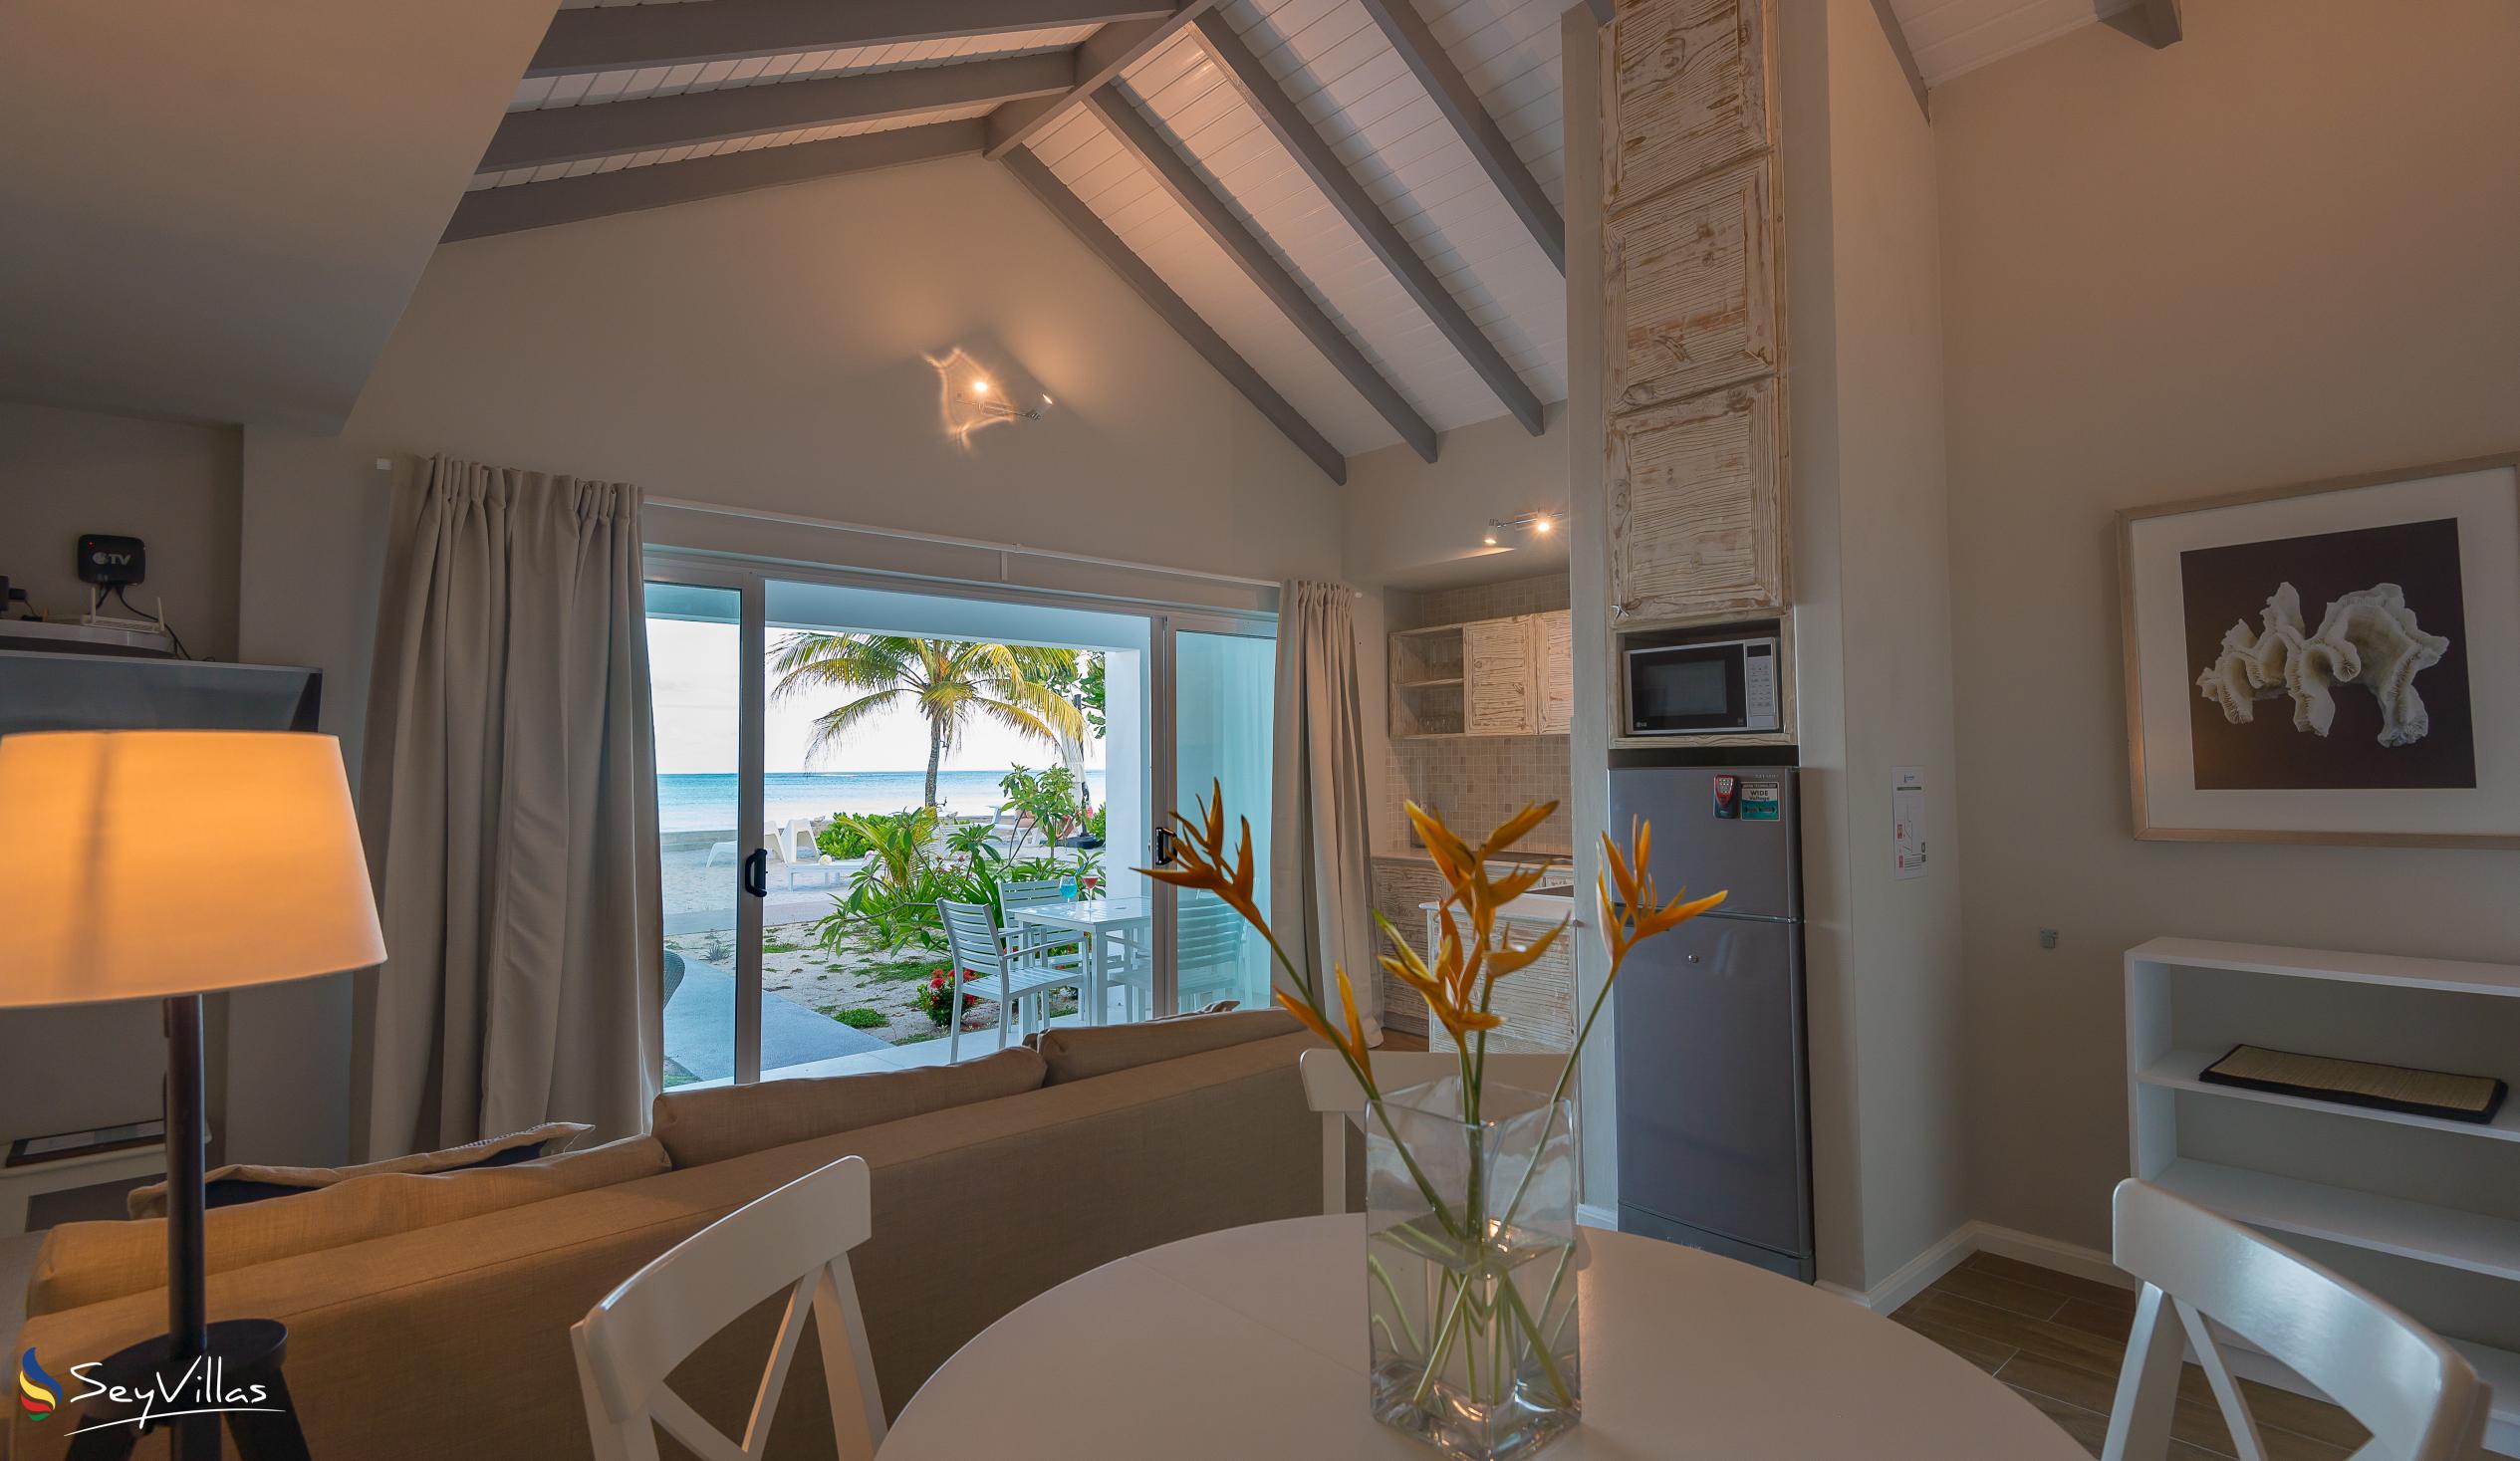 Foto 20: Le Nautique Luxury Beachfront Apartments - Beachfront-Appartement mit 2 Schlafzimmern - Mahé (Seychellen)